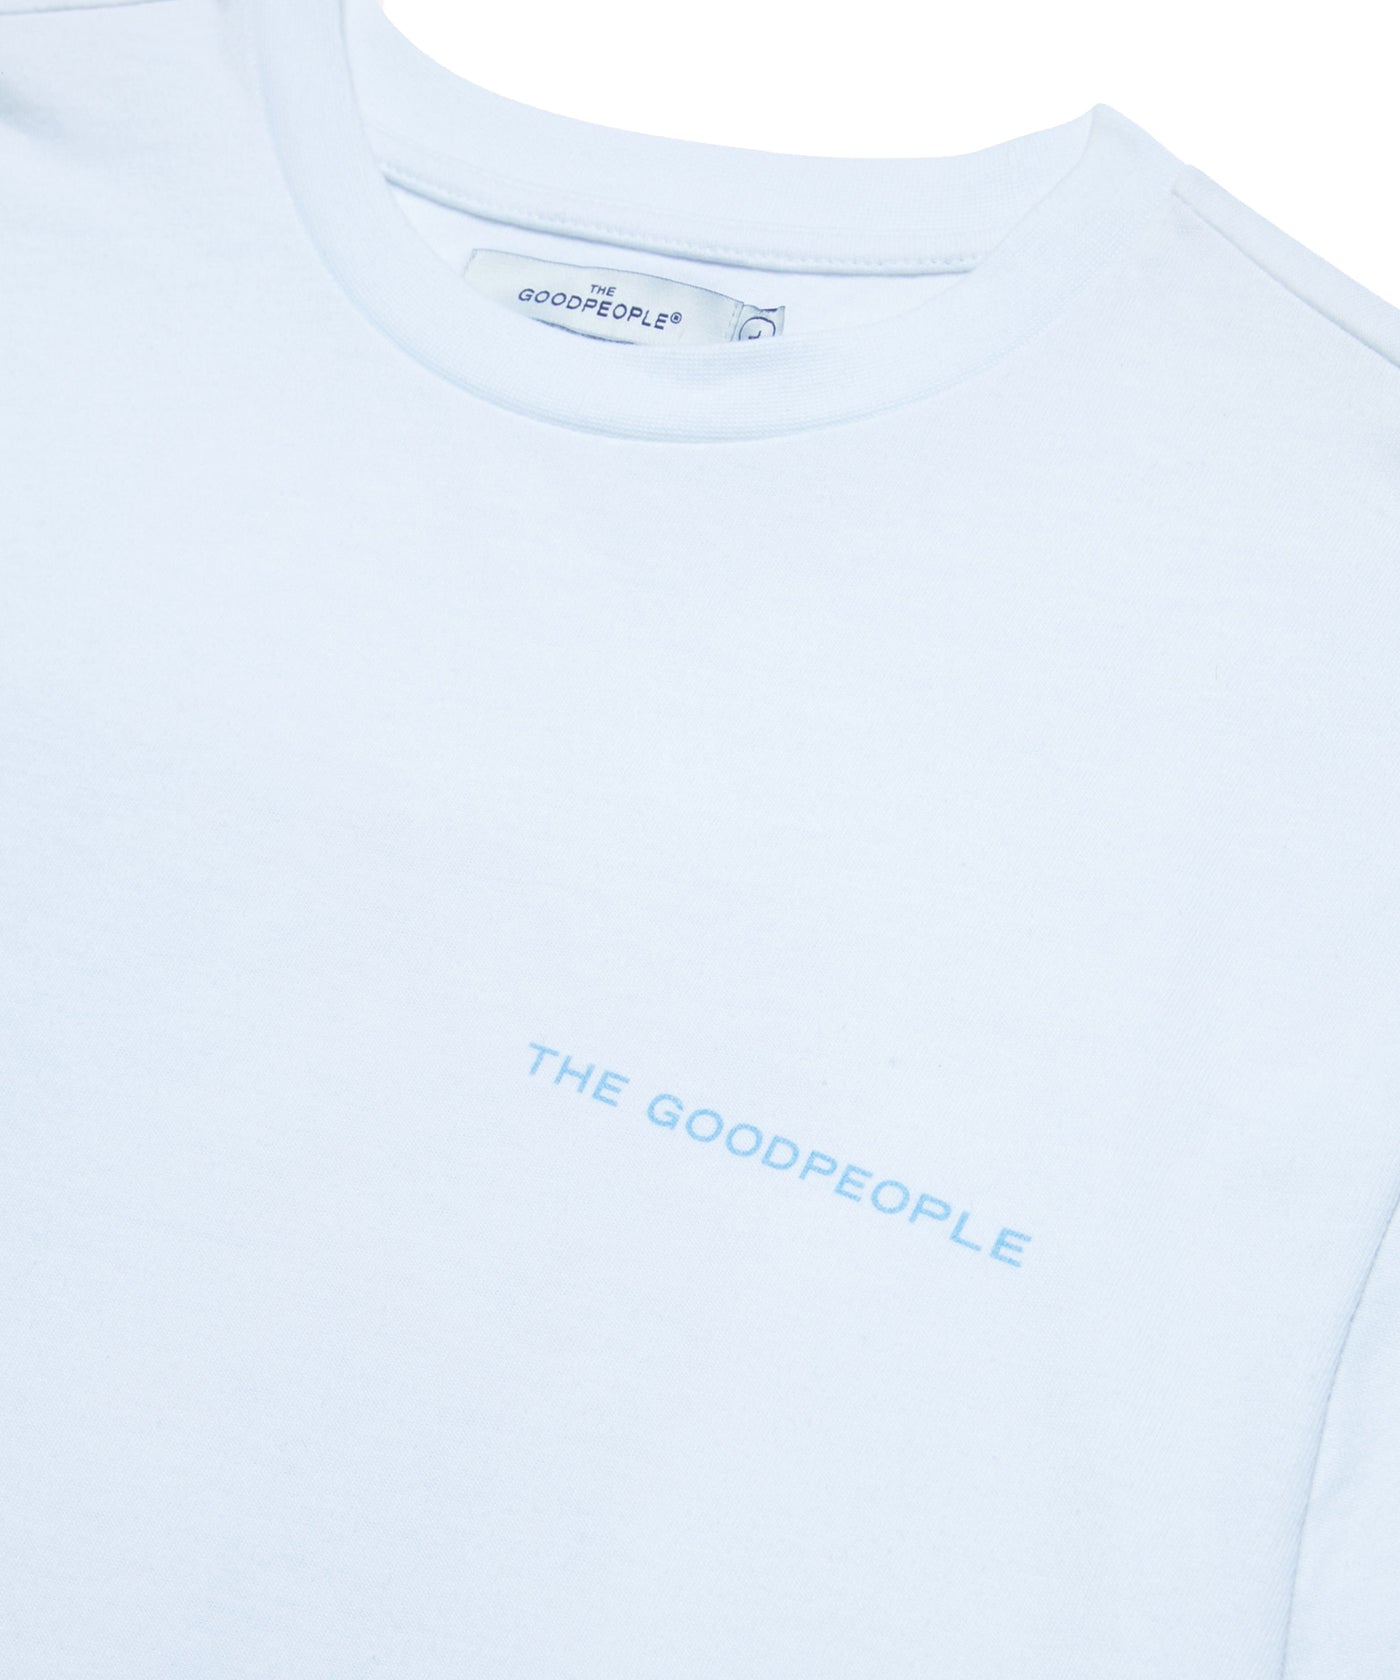 The GoodPeople - Tphoto - 23010911 - White